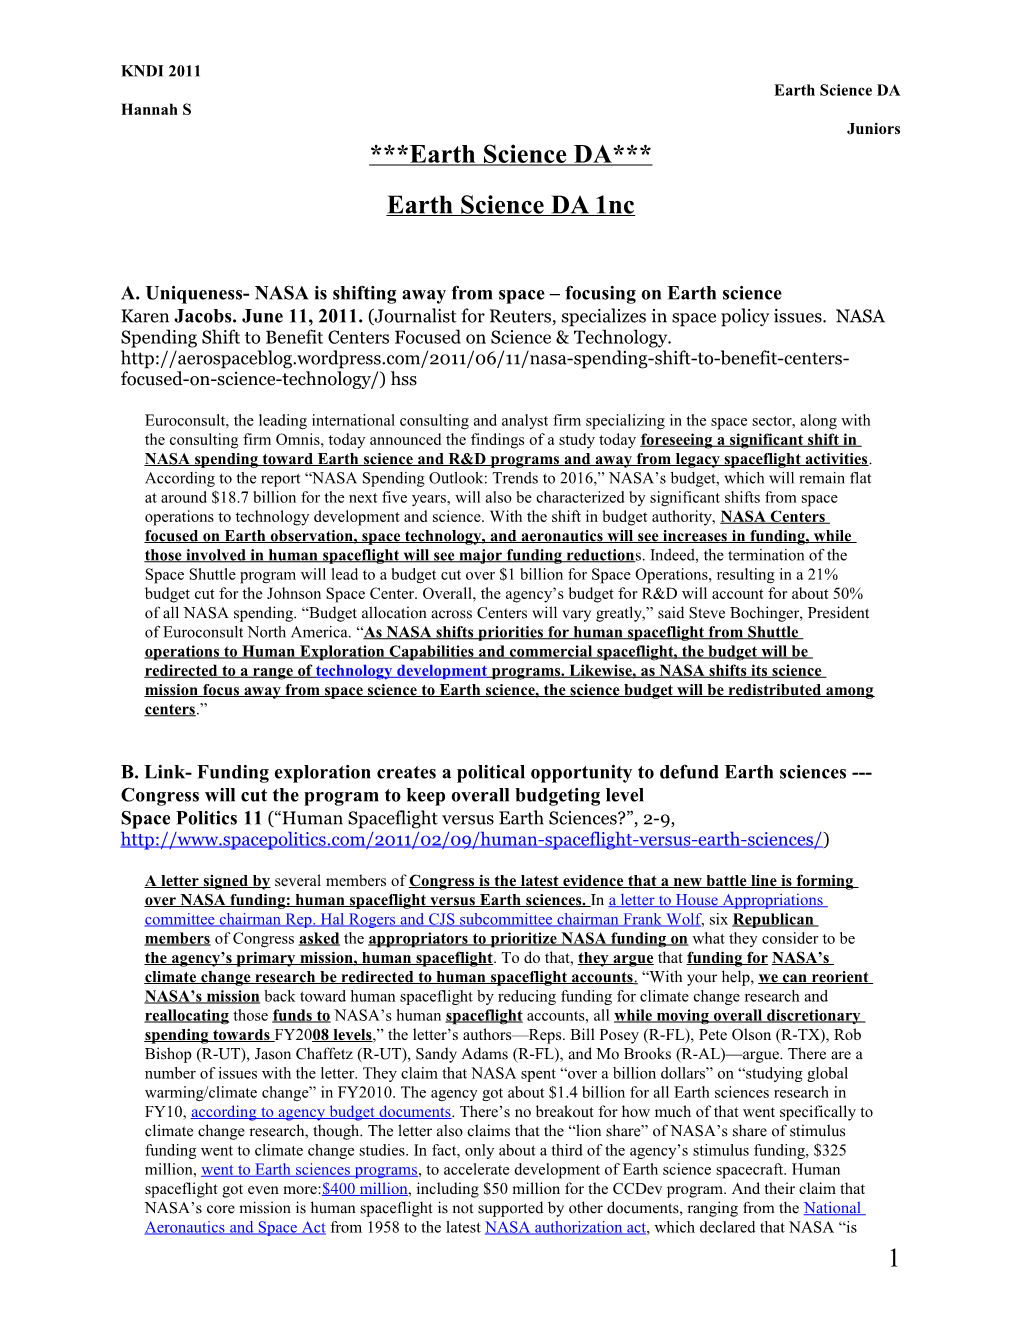 KNDI 2011 Earth Science DA